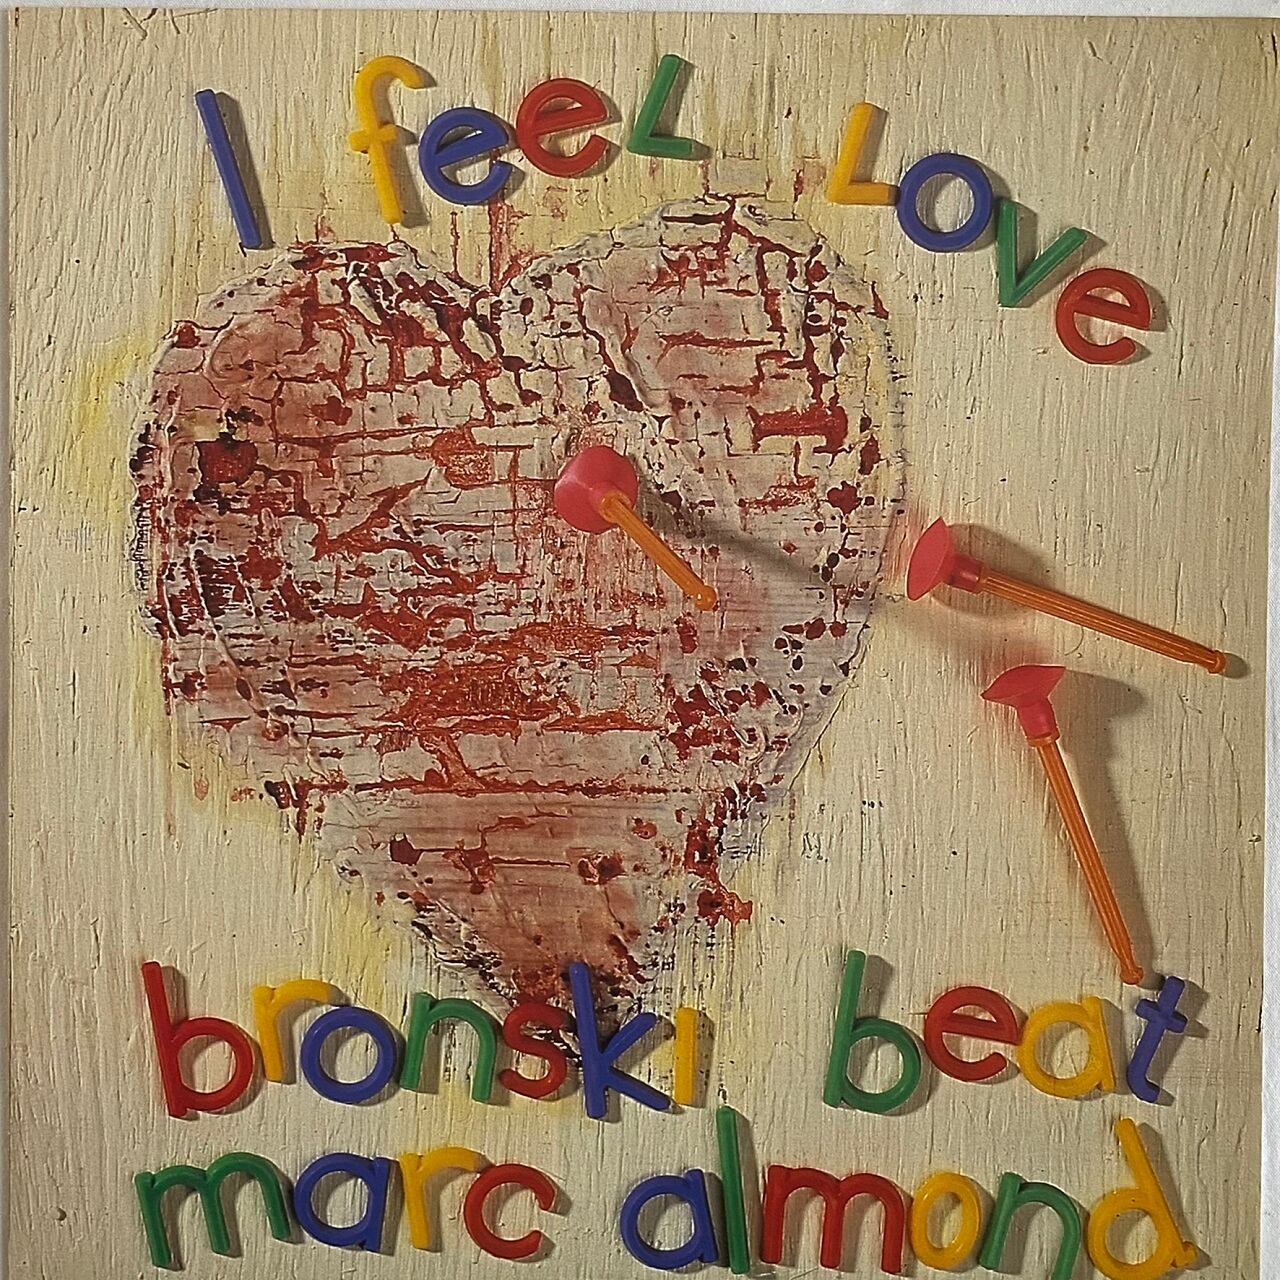 【12EP】Bronski Beat & Marc Almond – I Feel Love